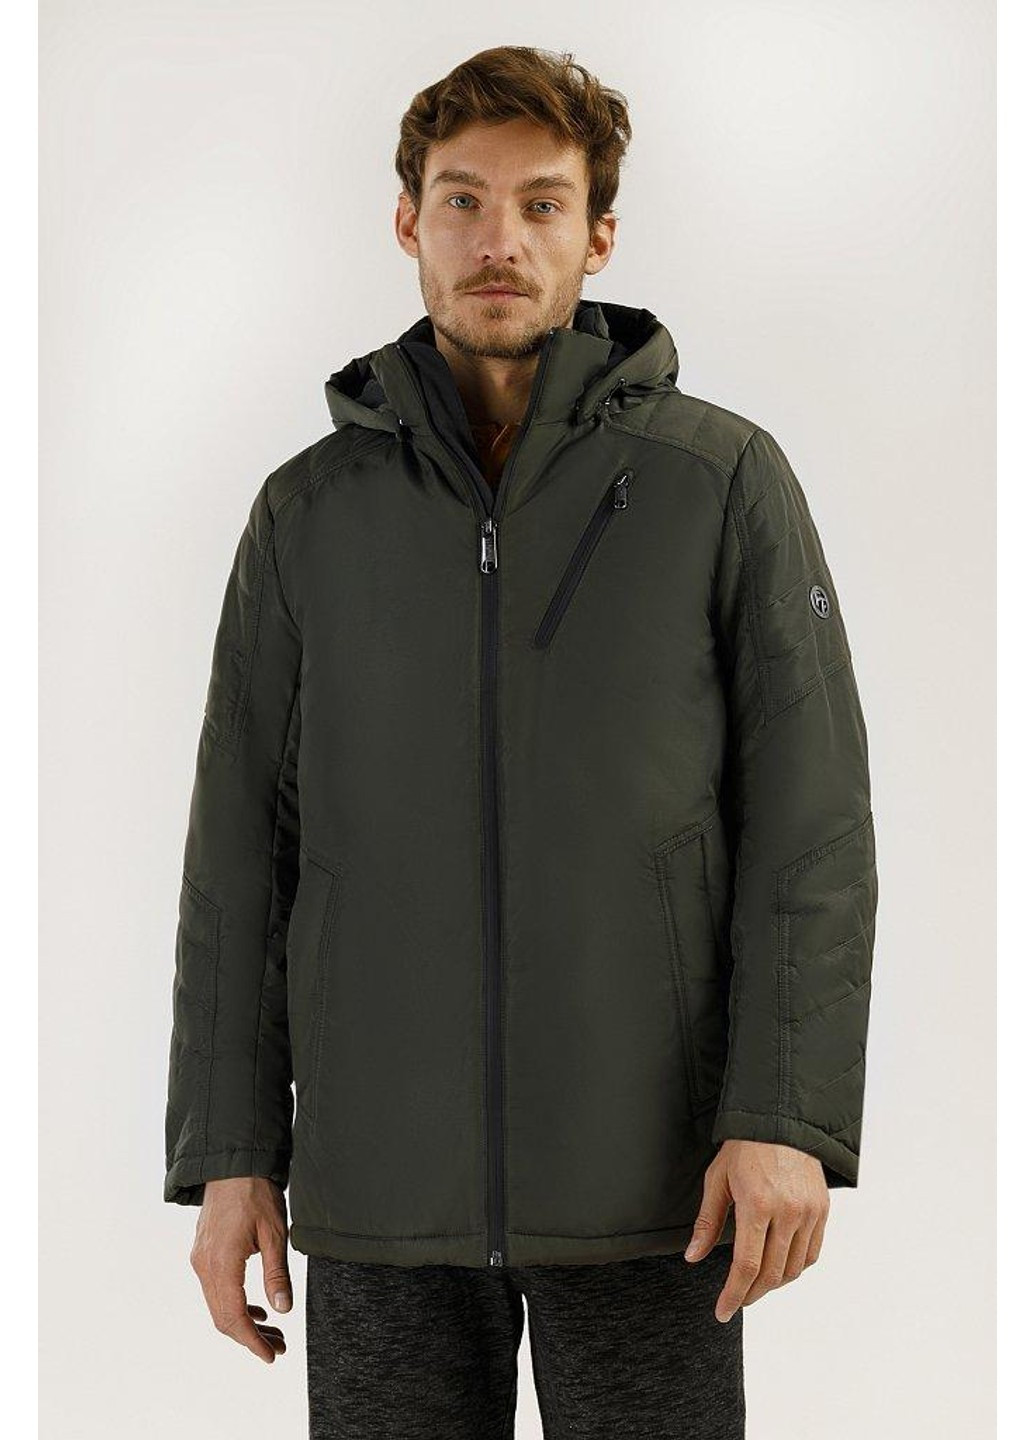 Зеленая демисезонная куртка a19-21004-905 Finn Flare